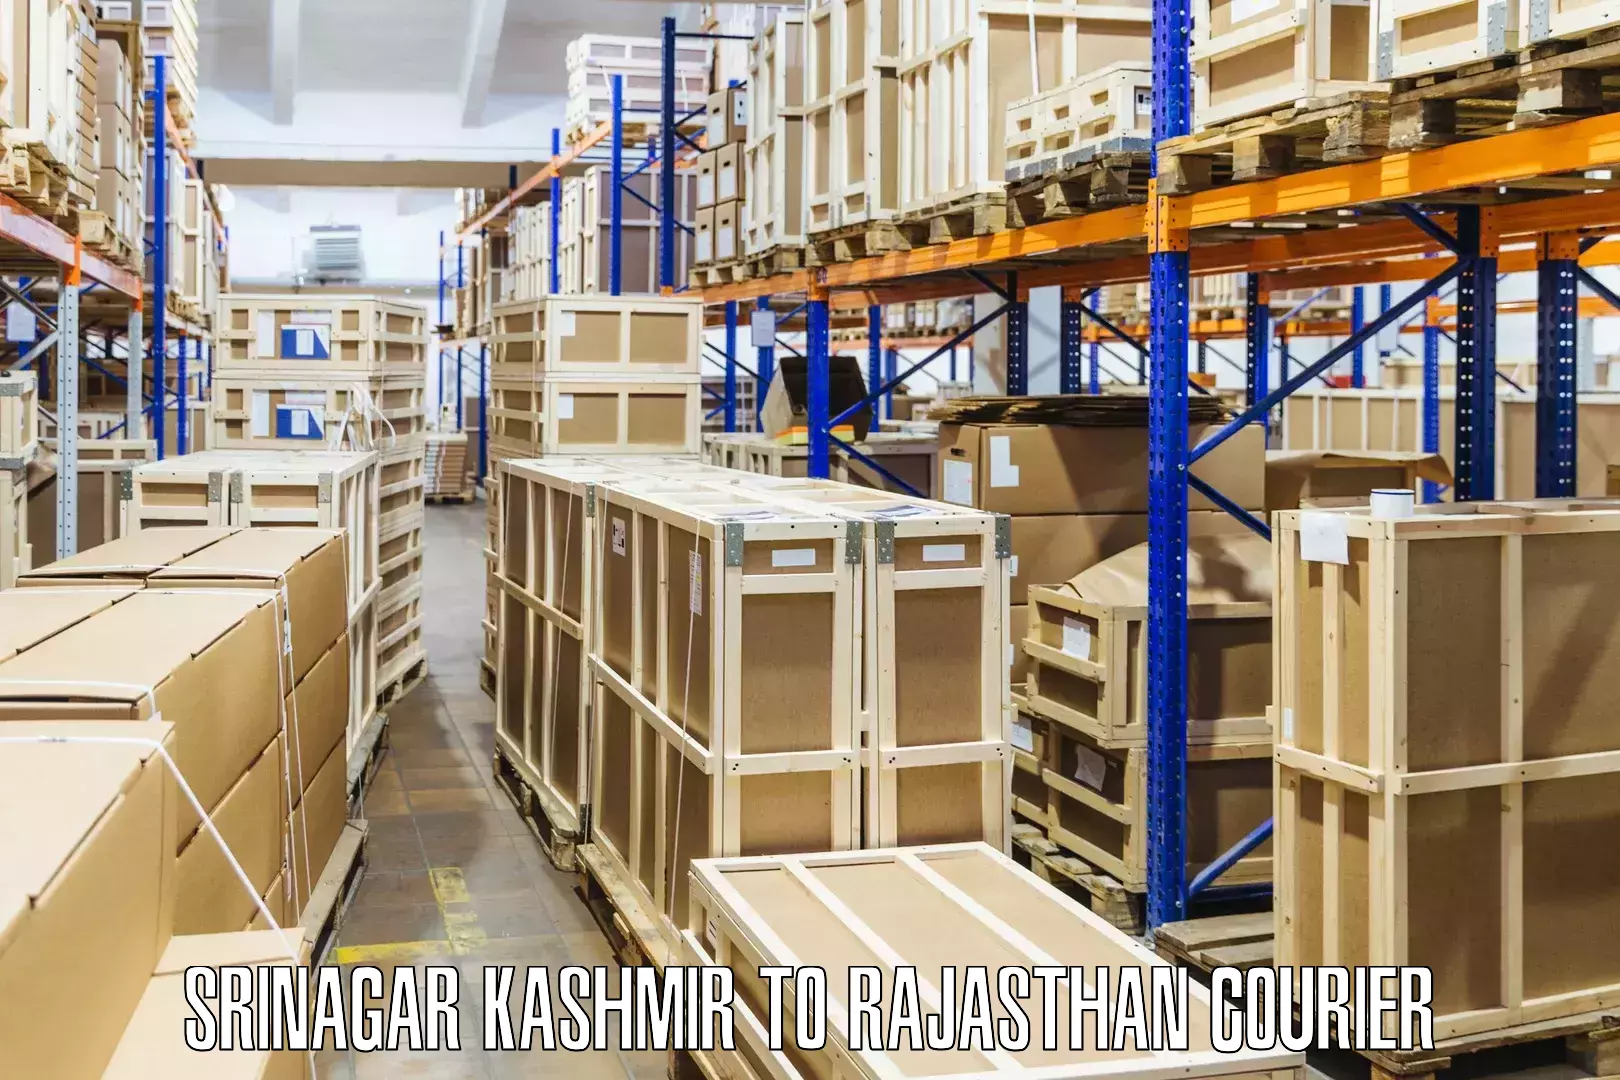 Global freight services Srinagar Kashmir to Kumbhalgarh